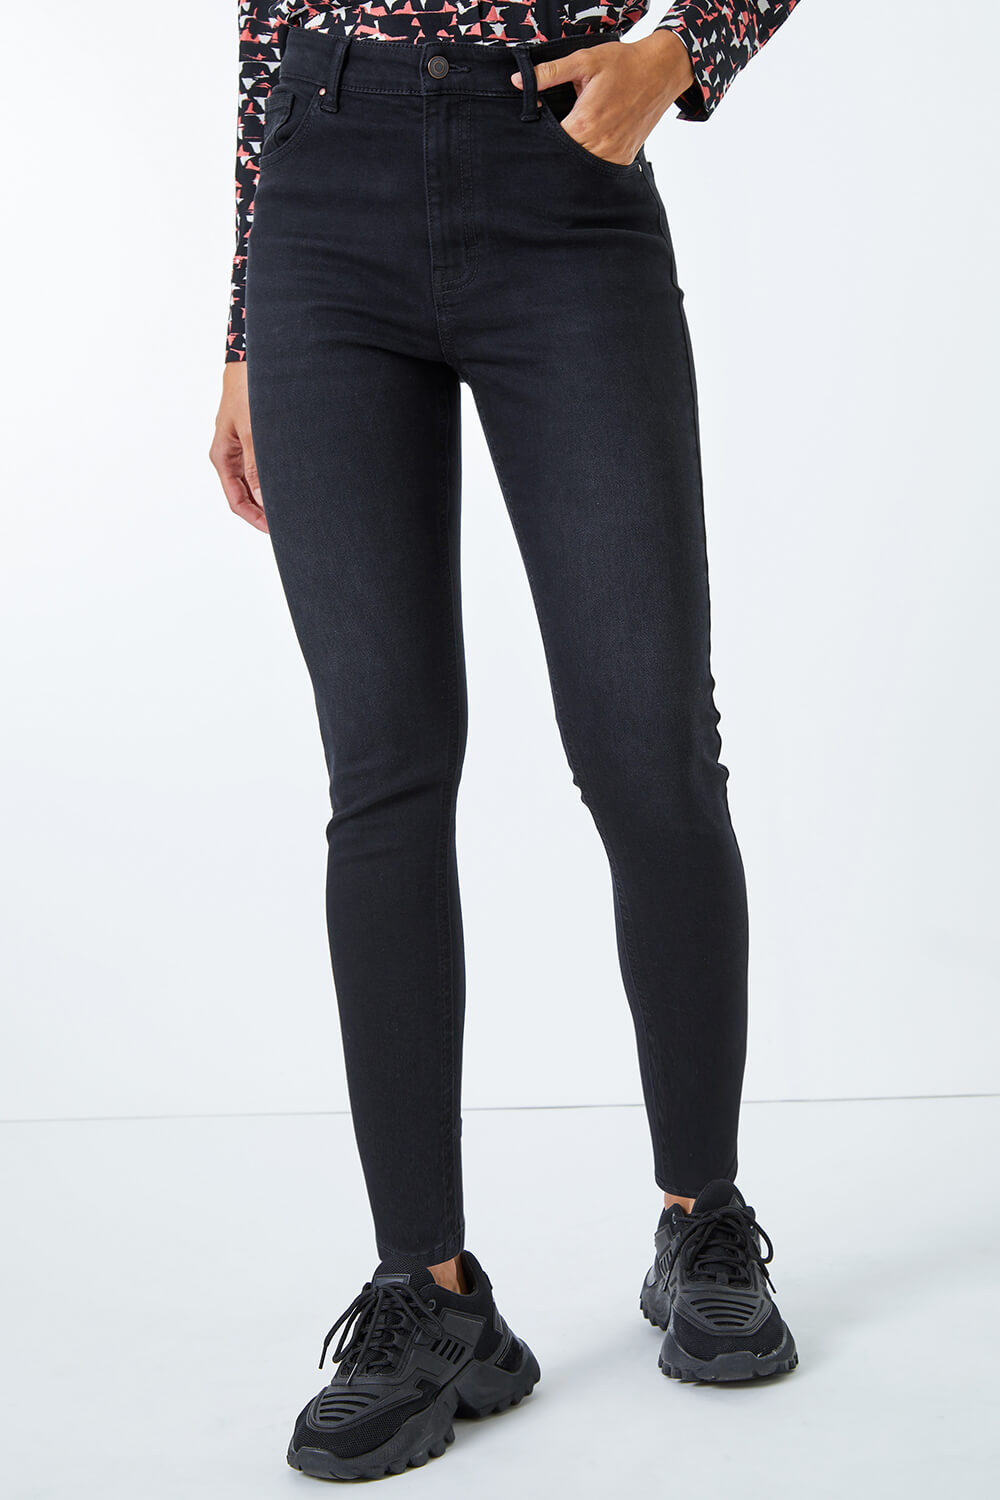 Black Super Skinny Stretch Jeans | Roman UK